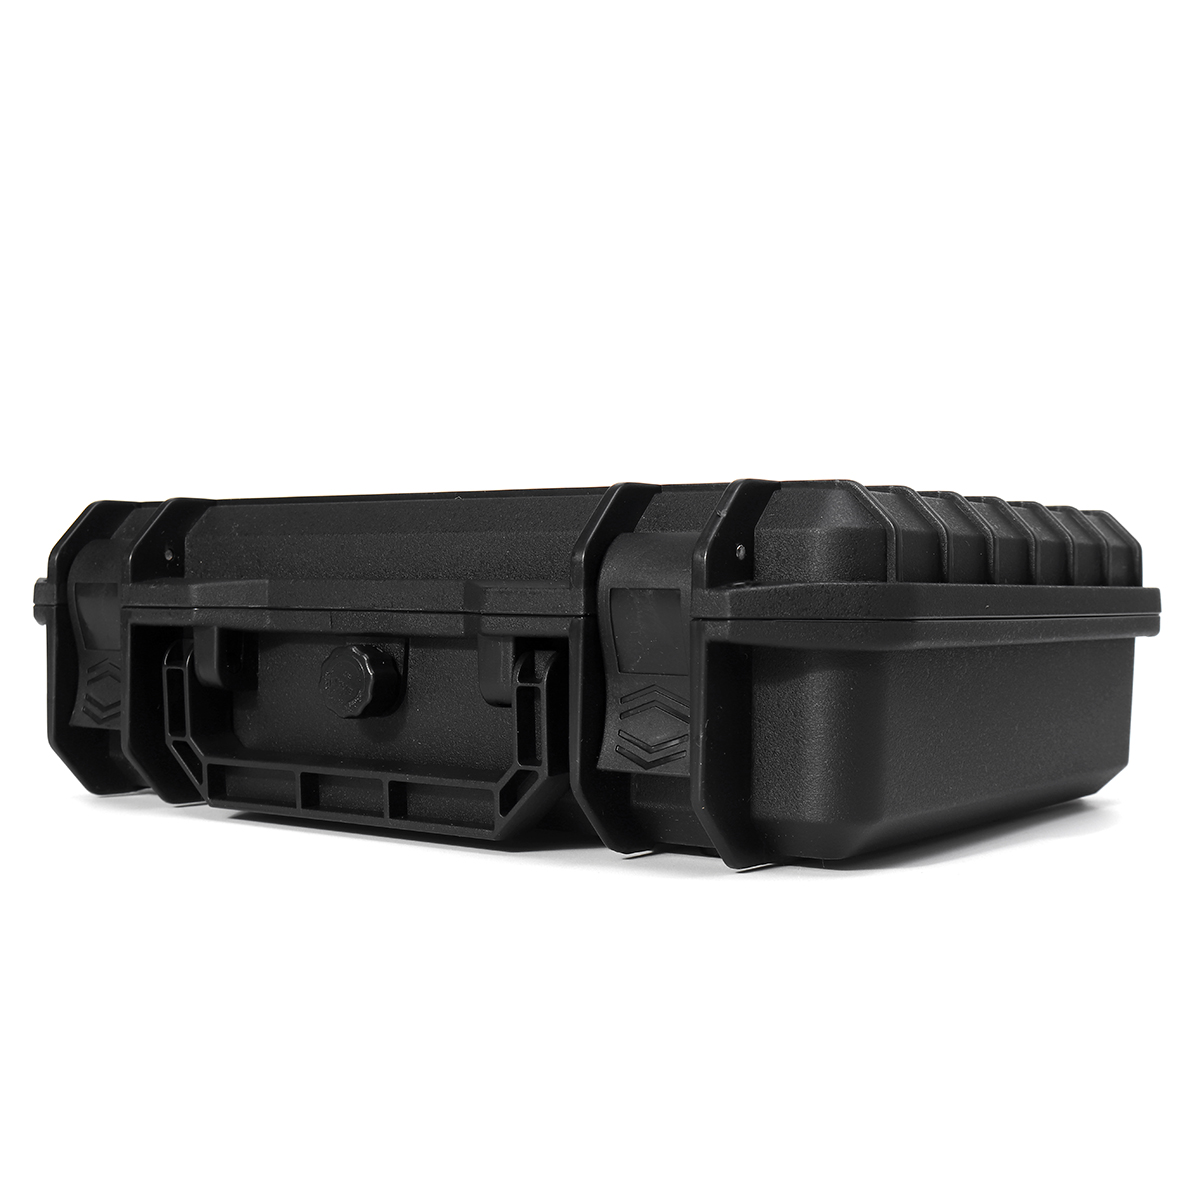 Waterproof-Hard-Carry-Tool-Case-Bag-Storage-Box-Camera-Photography-Sponge-Tool-Case-1835485-7